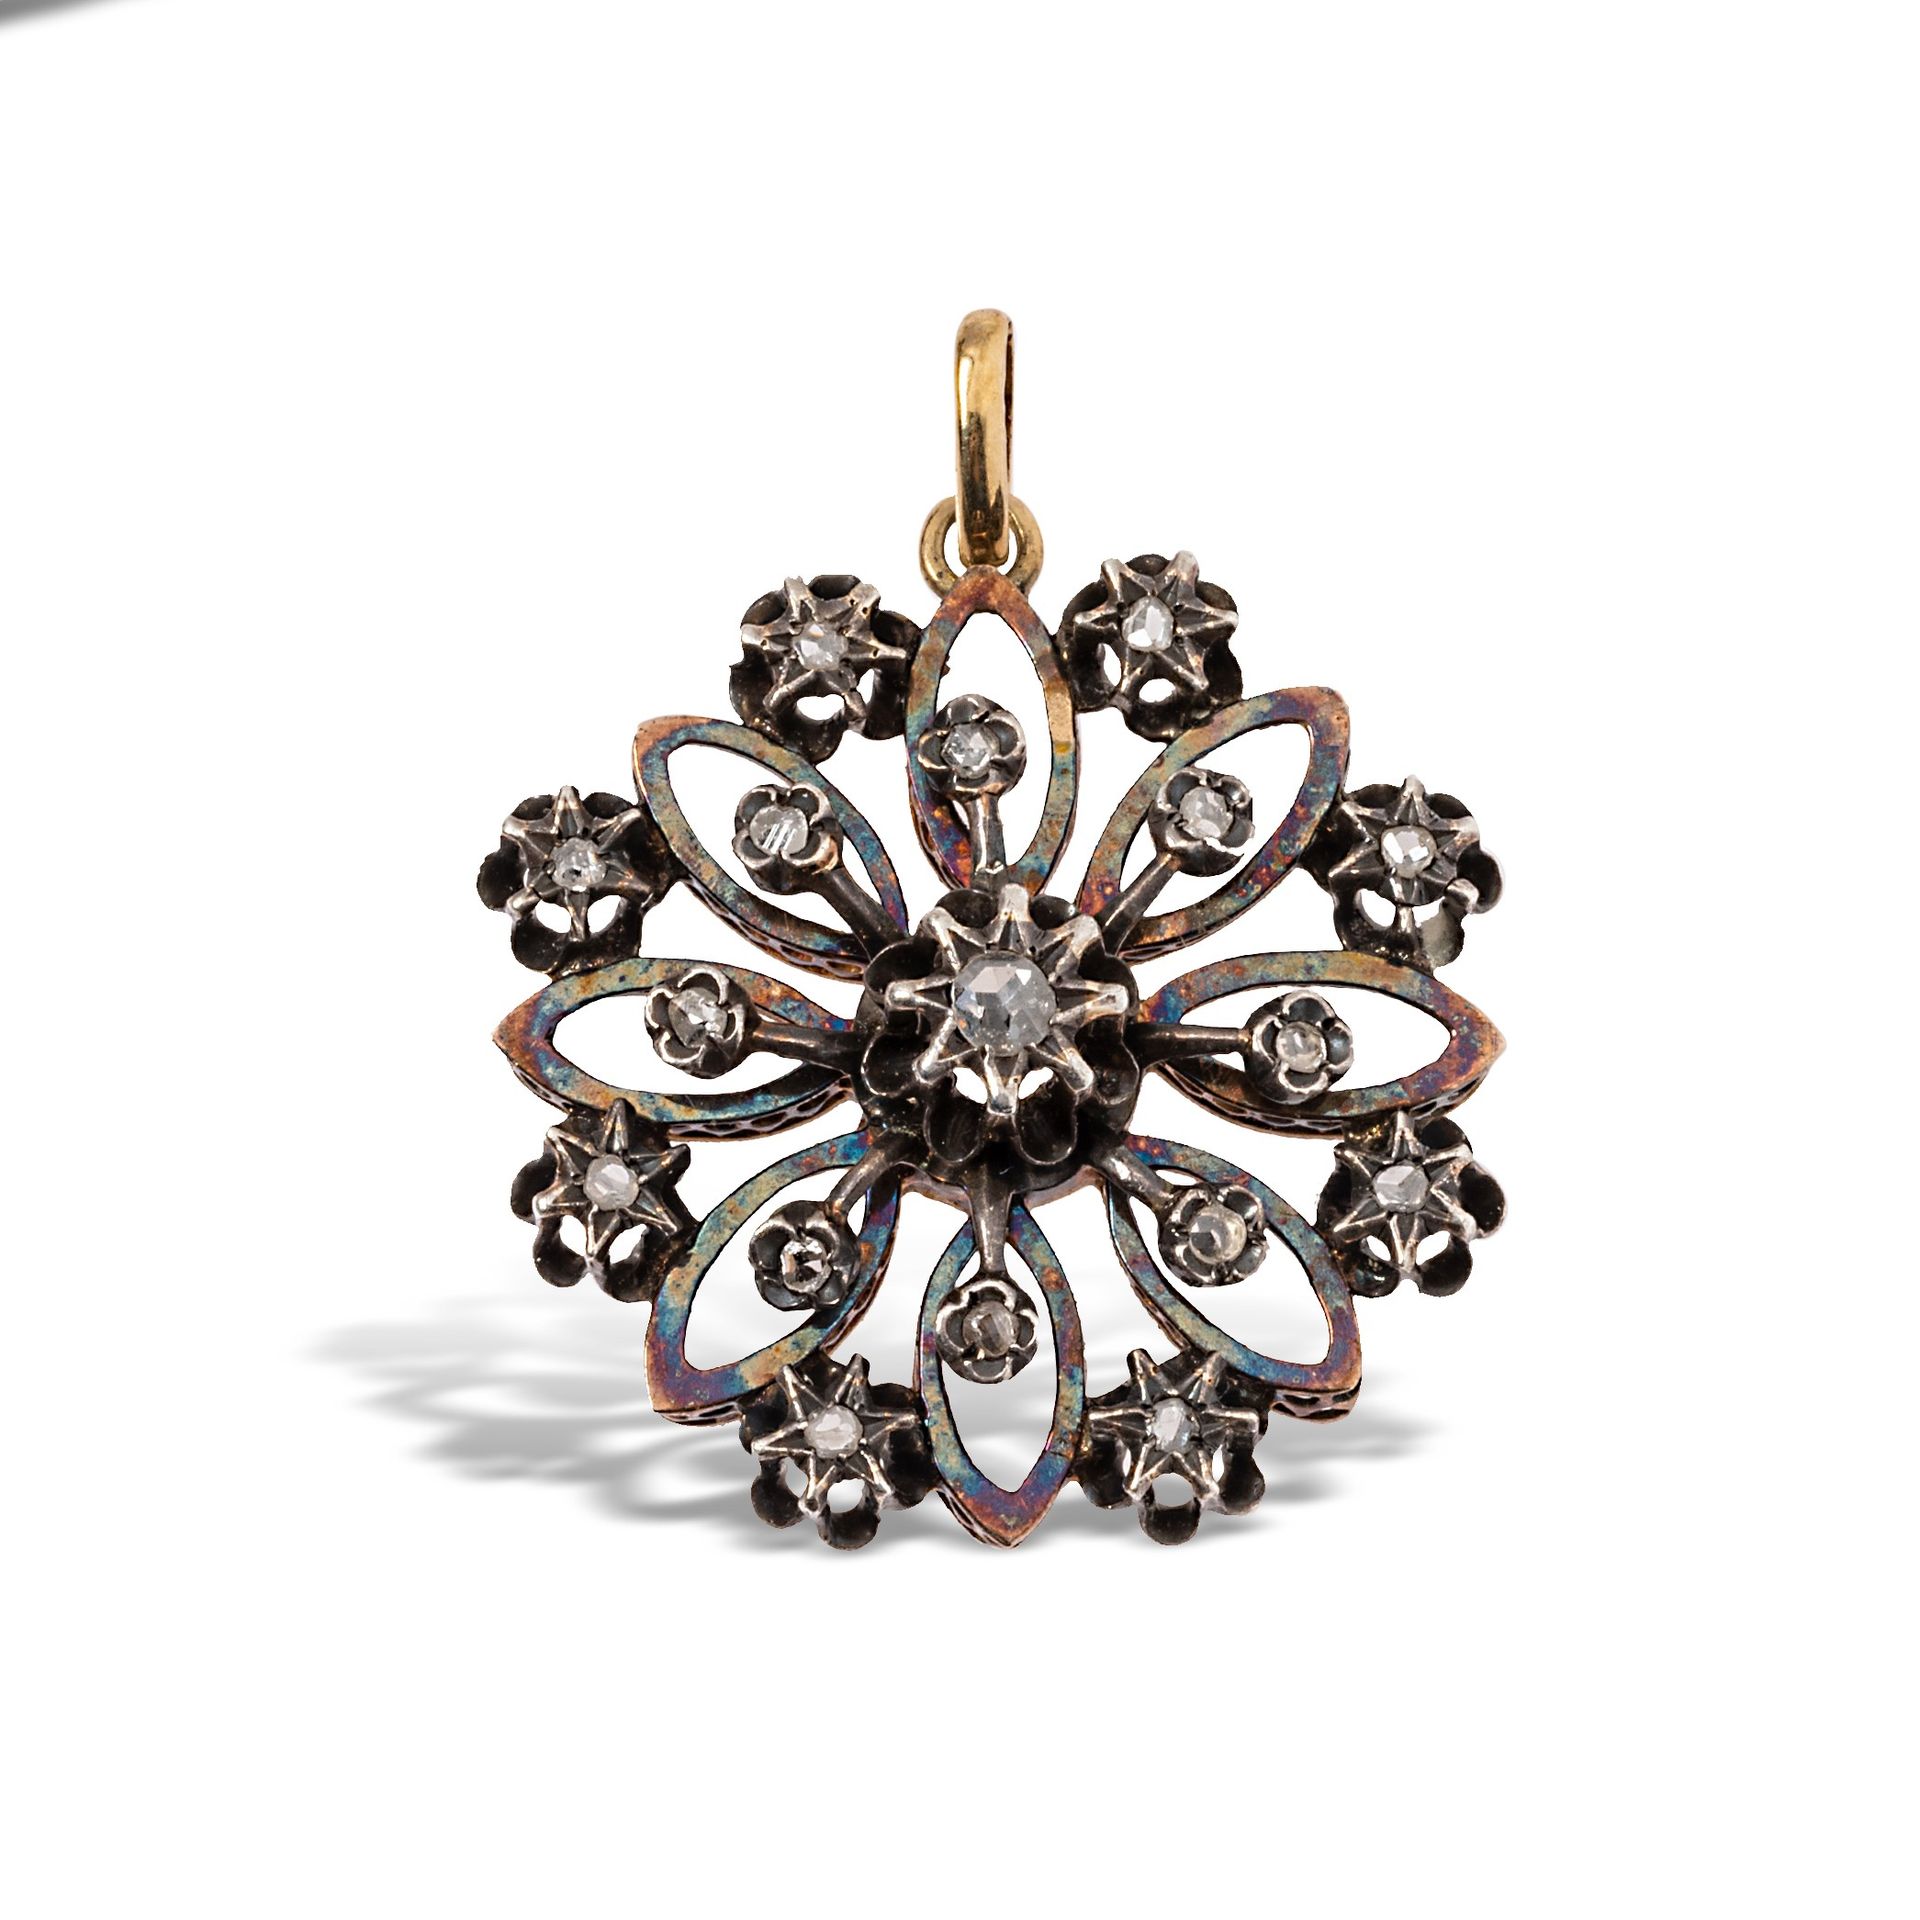 Null 银色和金色的吊坠，上面有一个镶嵌着玫瑰式切割钻石的花环。

直径：2.5厘米左右。- 毛重 : 5,5 g